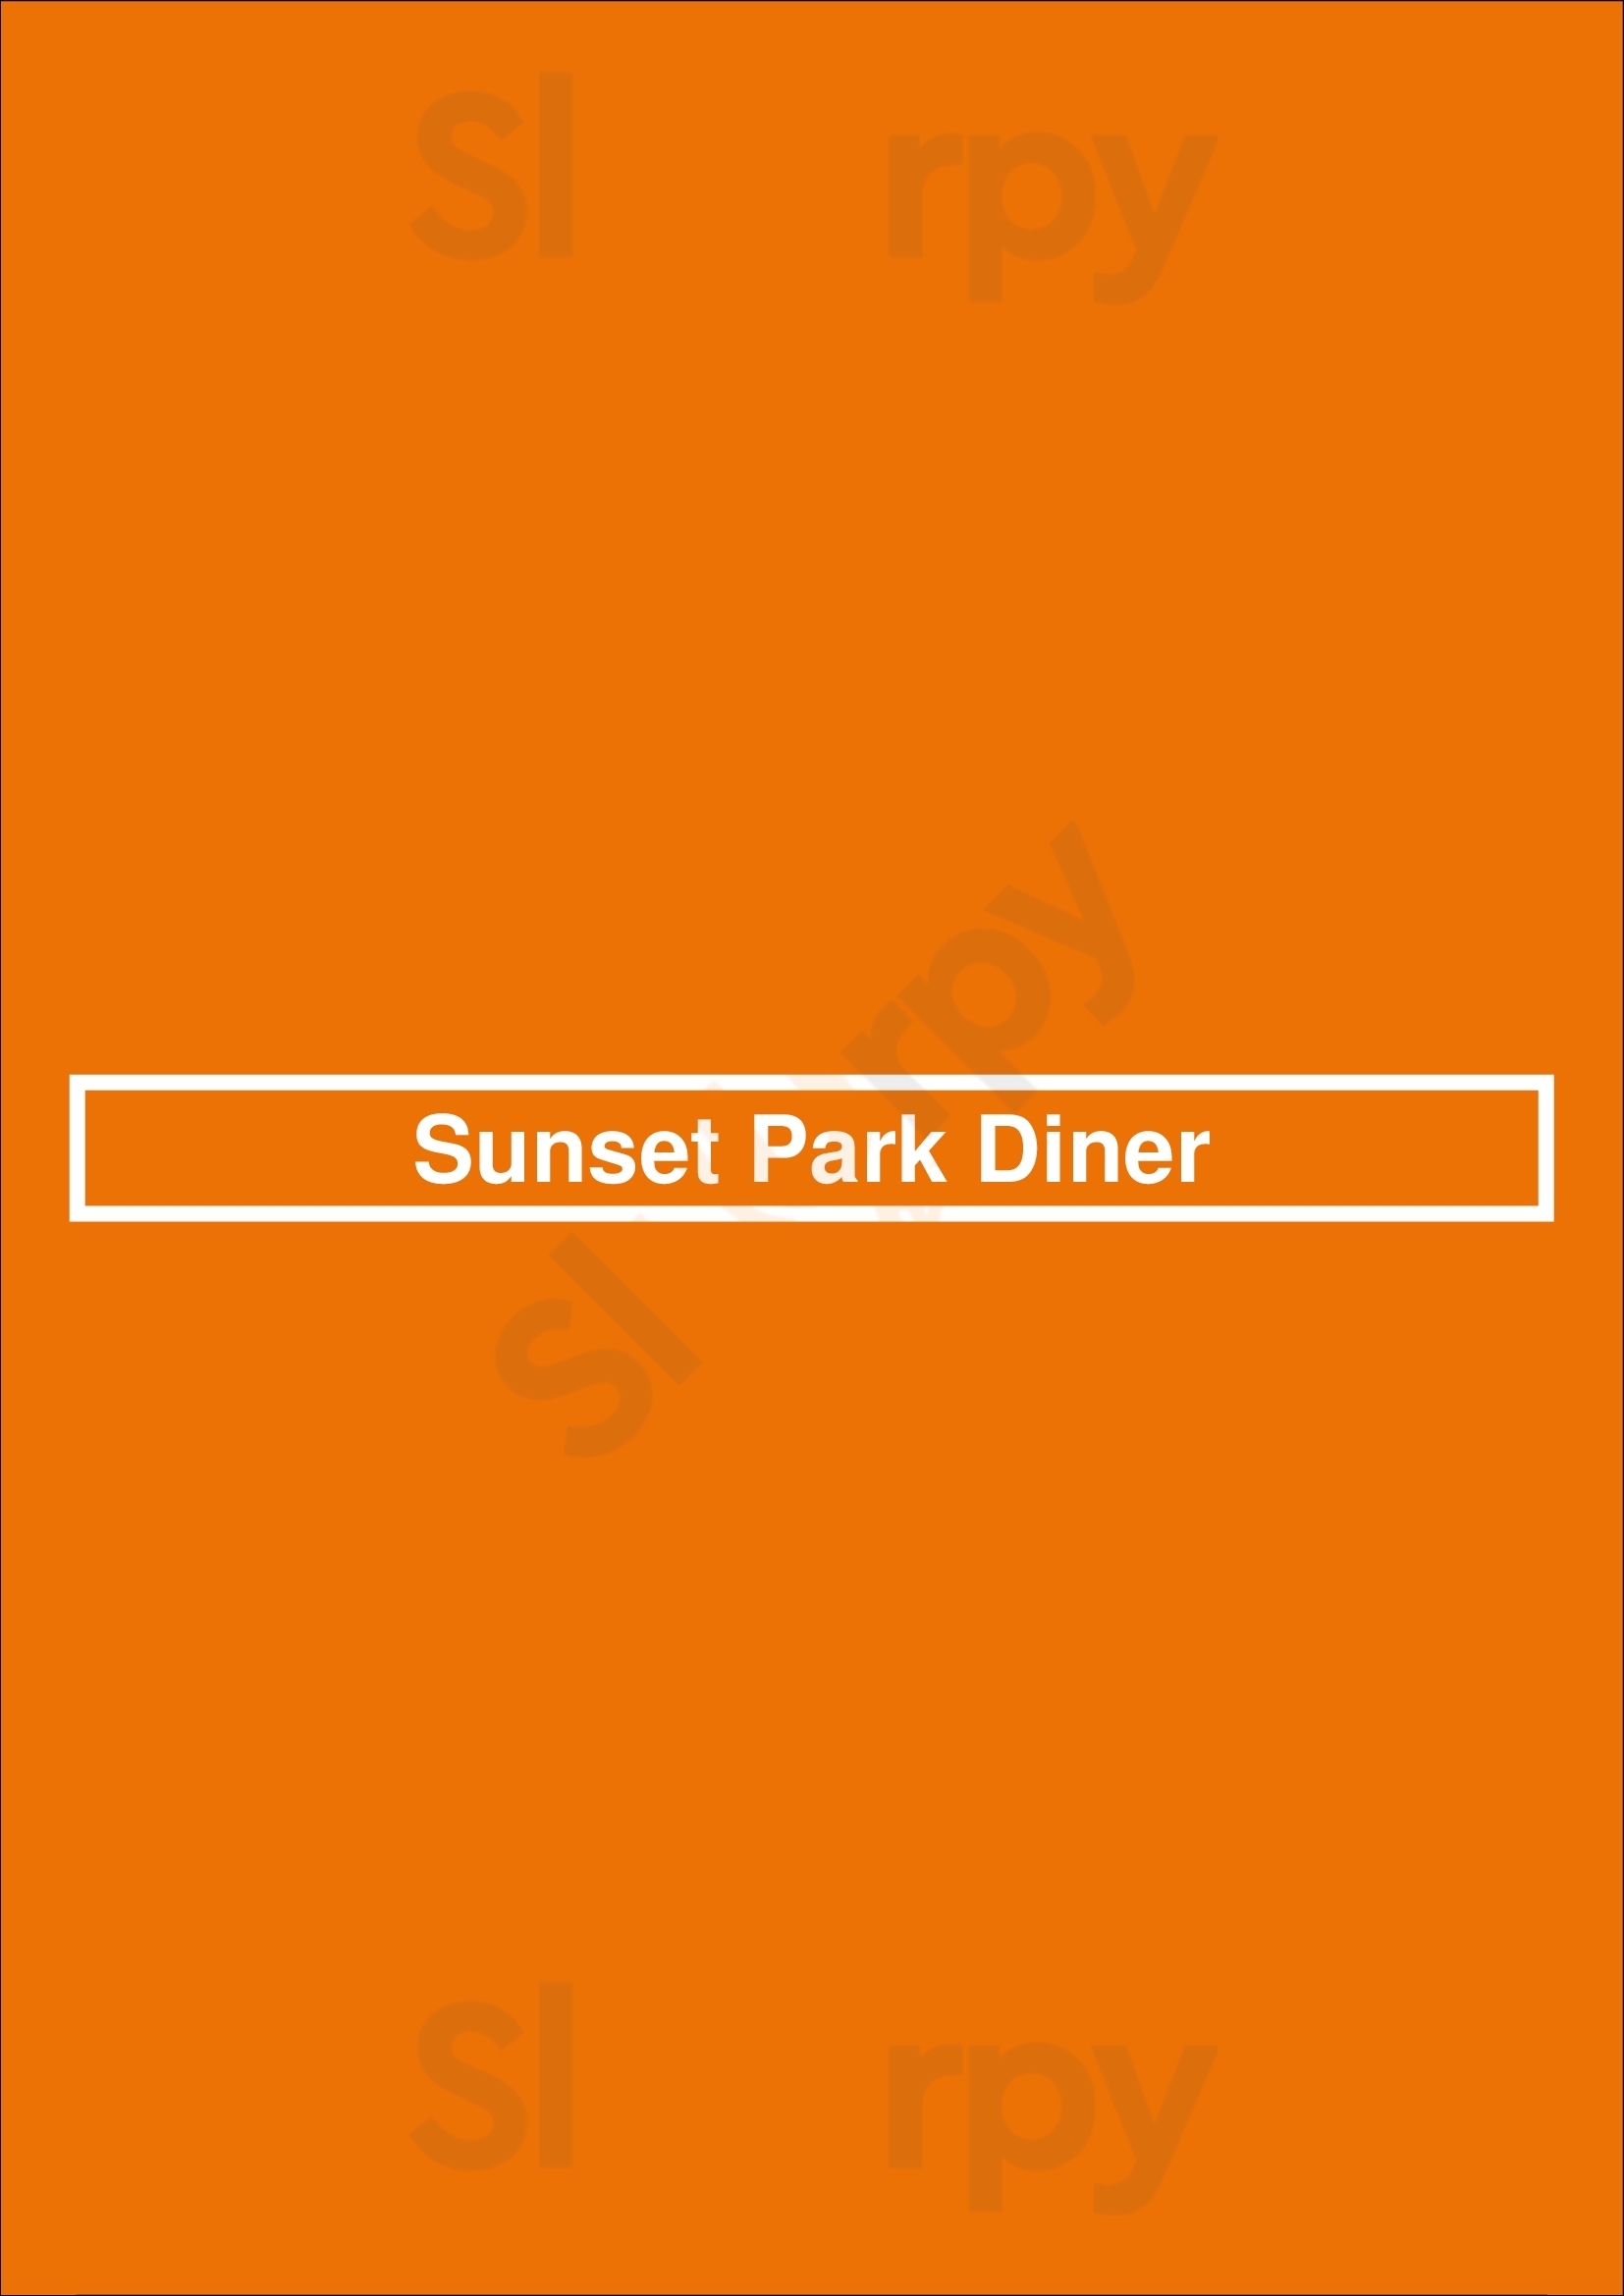 Sunset Park Diner Brooklyn Menu - 1